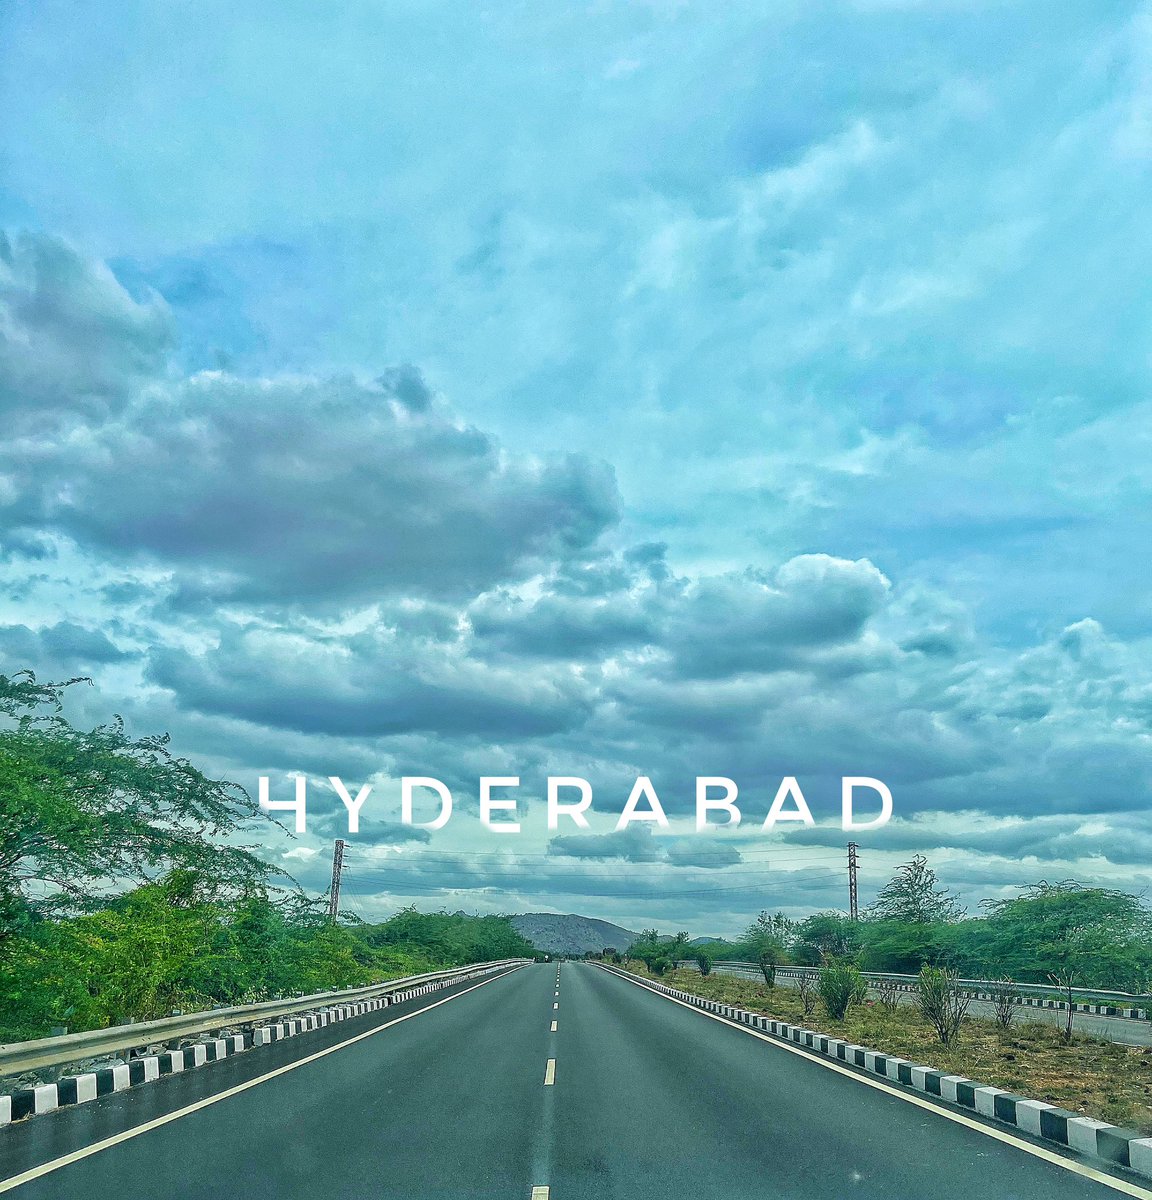 En Route #Hyderabad 
.
.
.
#telangana #hyderabad #hyderabad_diaries #hyderabadis #hyderabadi #travel #travelphotography #travelgram #travelling #traveller #instatravel #travels #drive #longdrive #business #businesstrip #businesstravel #prakya #prathapavishwanath #prathapsetty